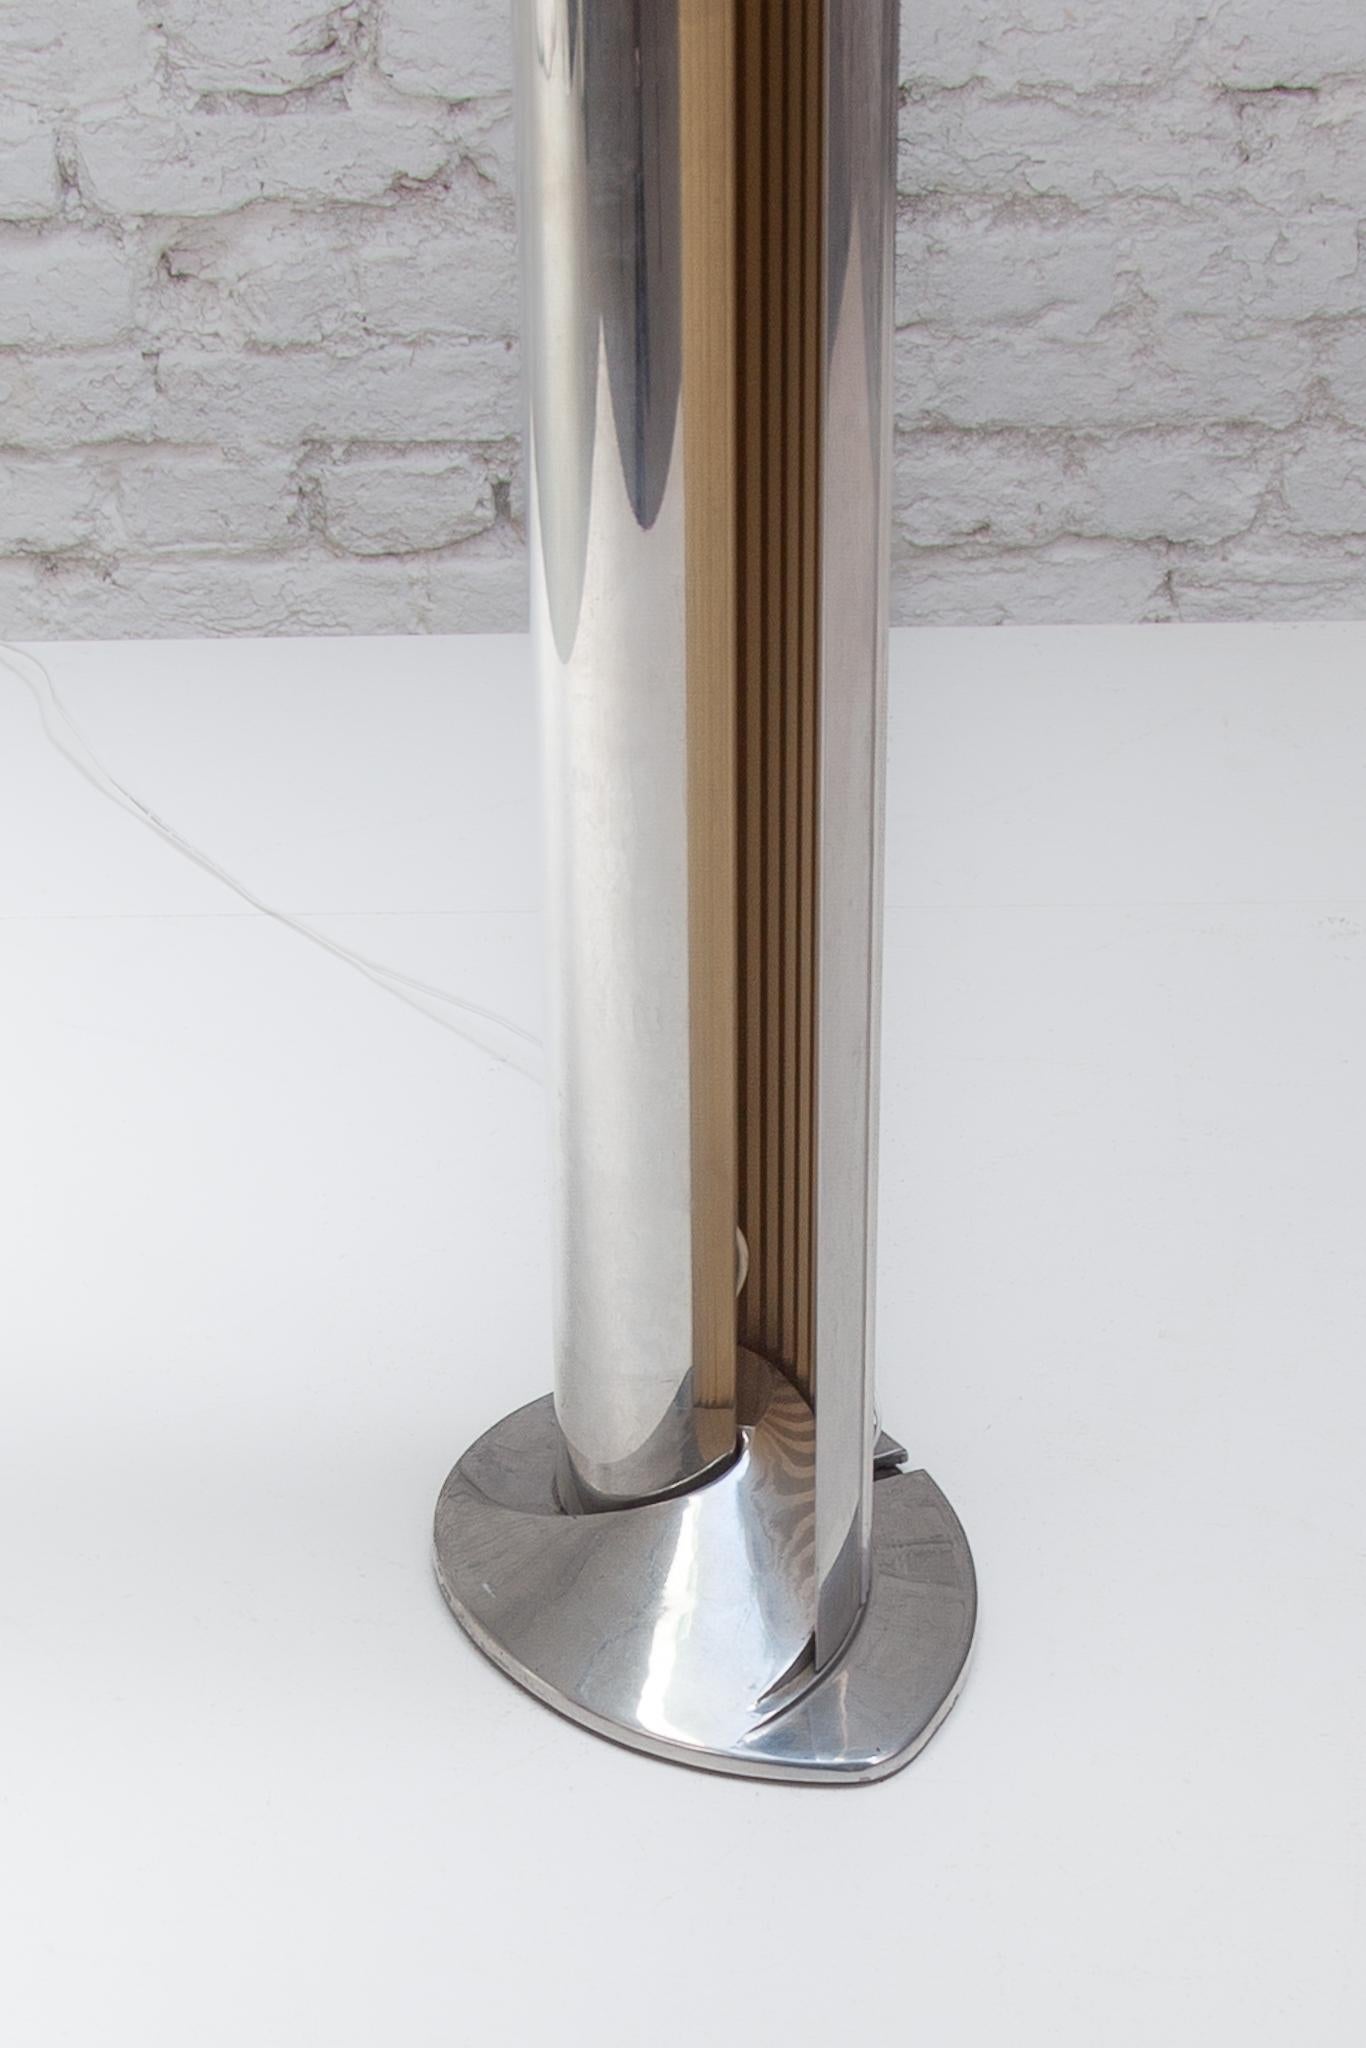 Aluminum 1980s Penombra Floor Lamp by Antoni Flores for Sargot Barcelona For Sale 7